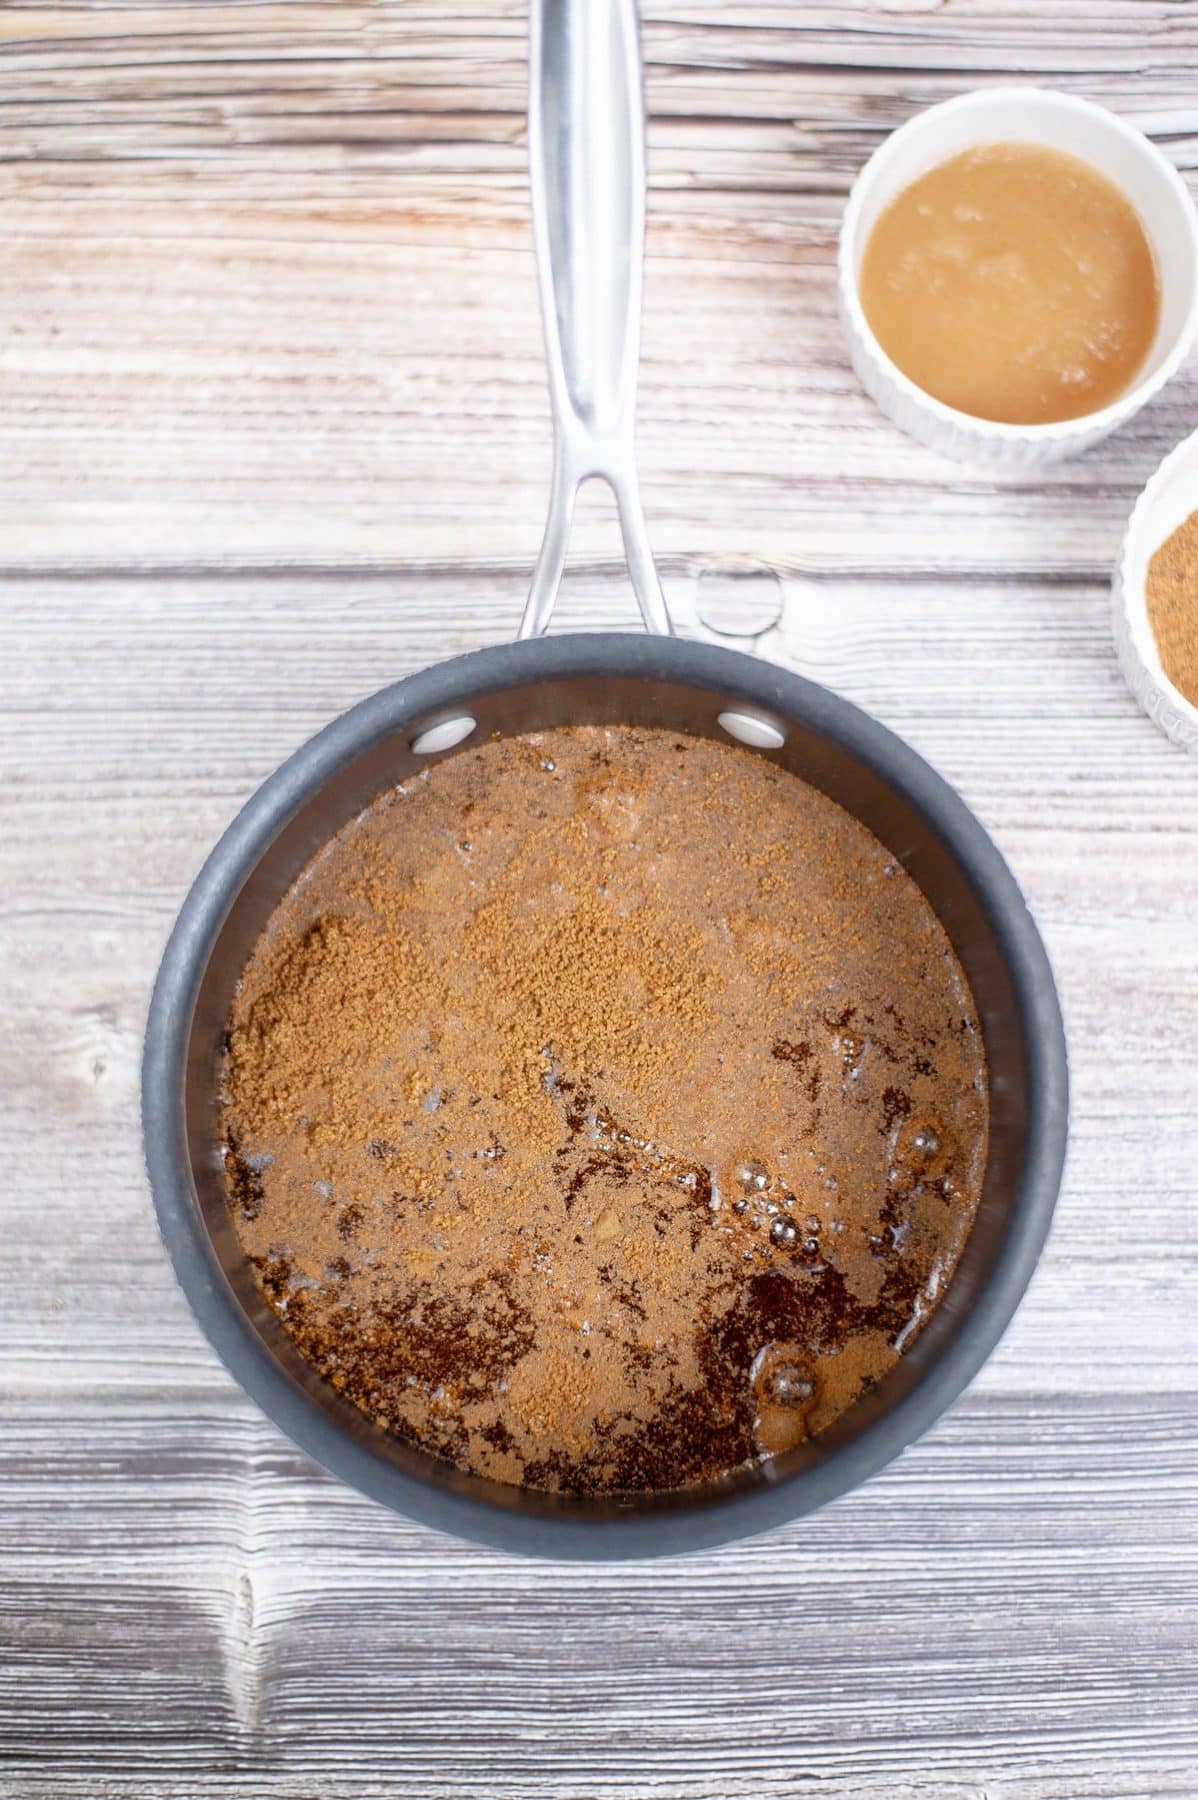 boil ingredients in saucepan and reduce